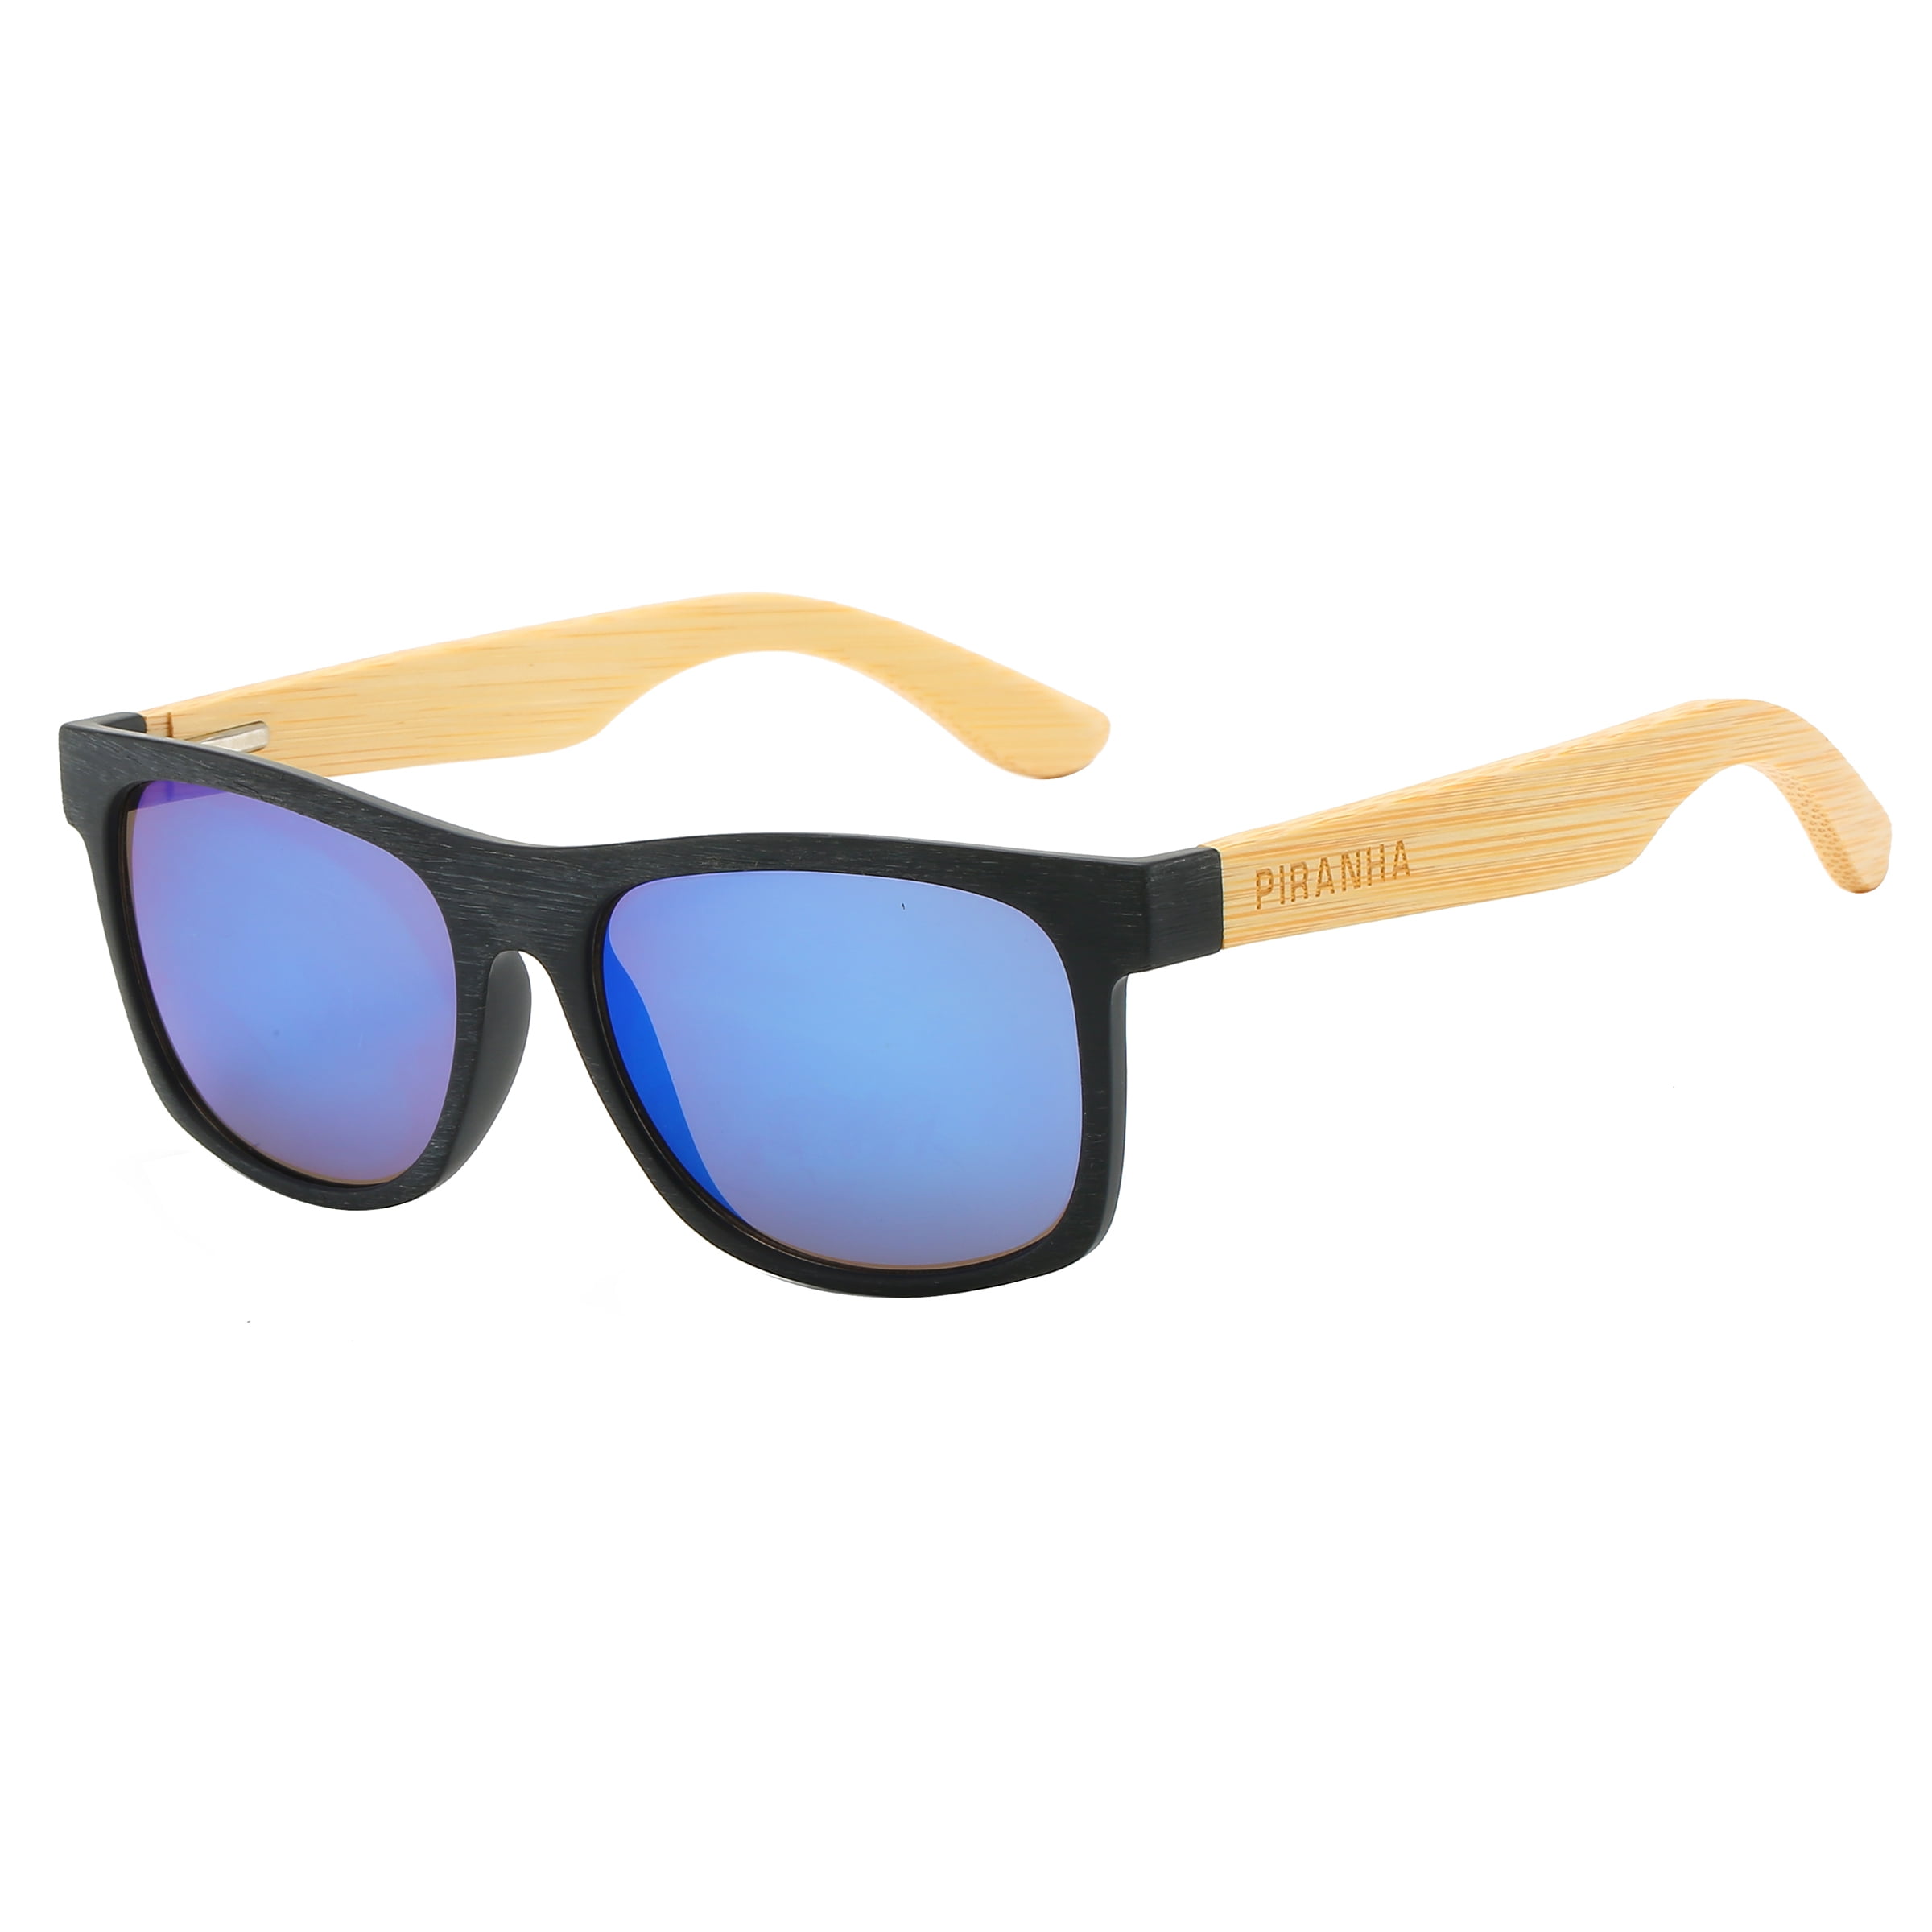 Piranha Premium All-Natural Bamboo Temple Sunglasses Style #62053